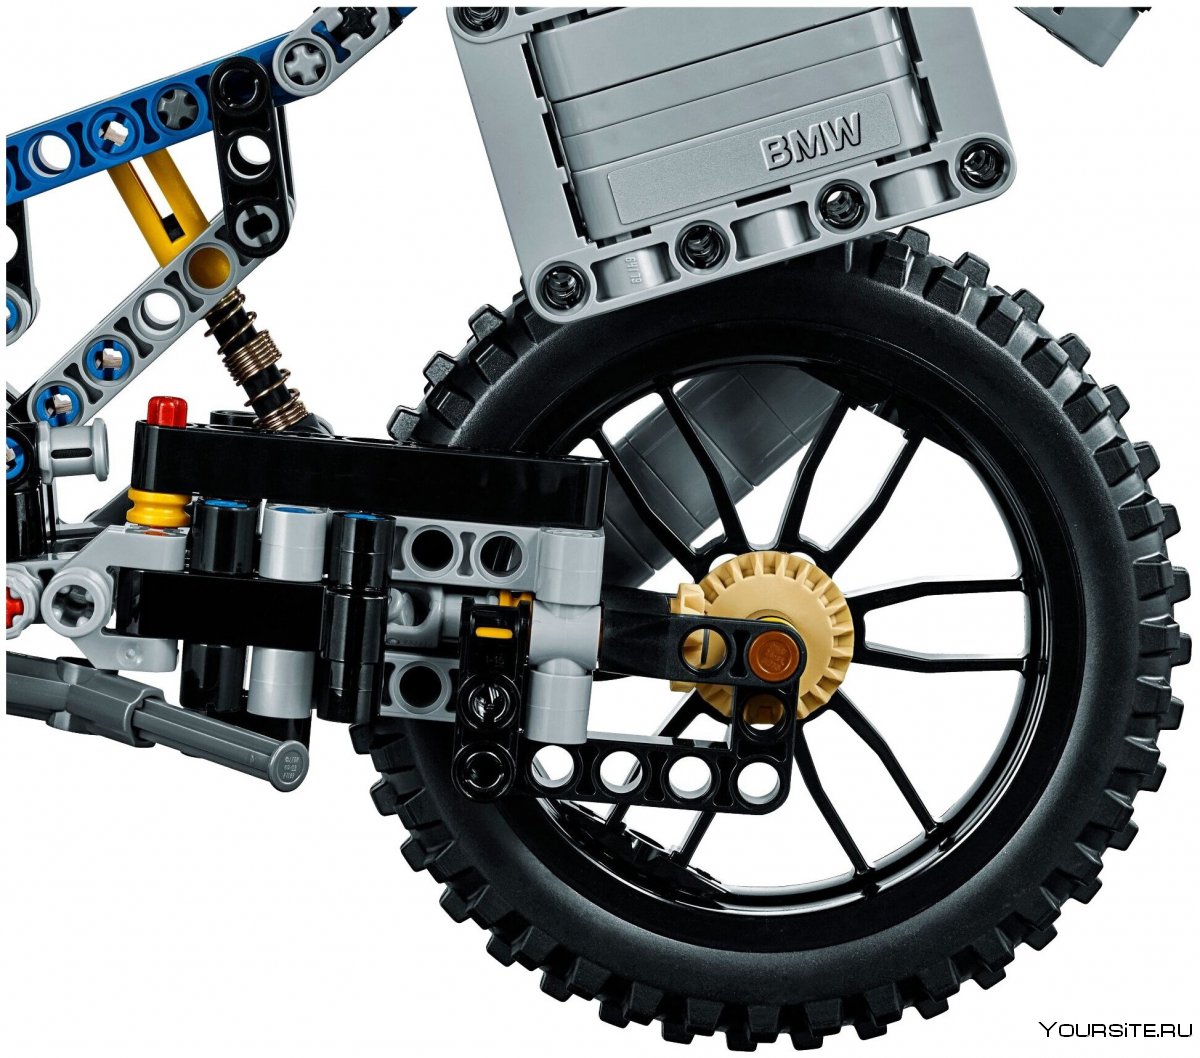 LEGO Technic 42063